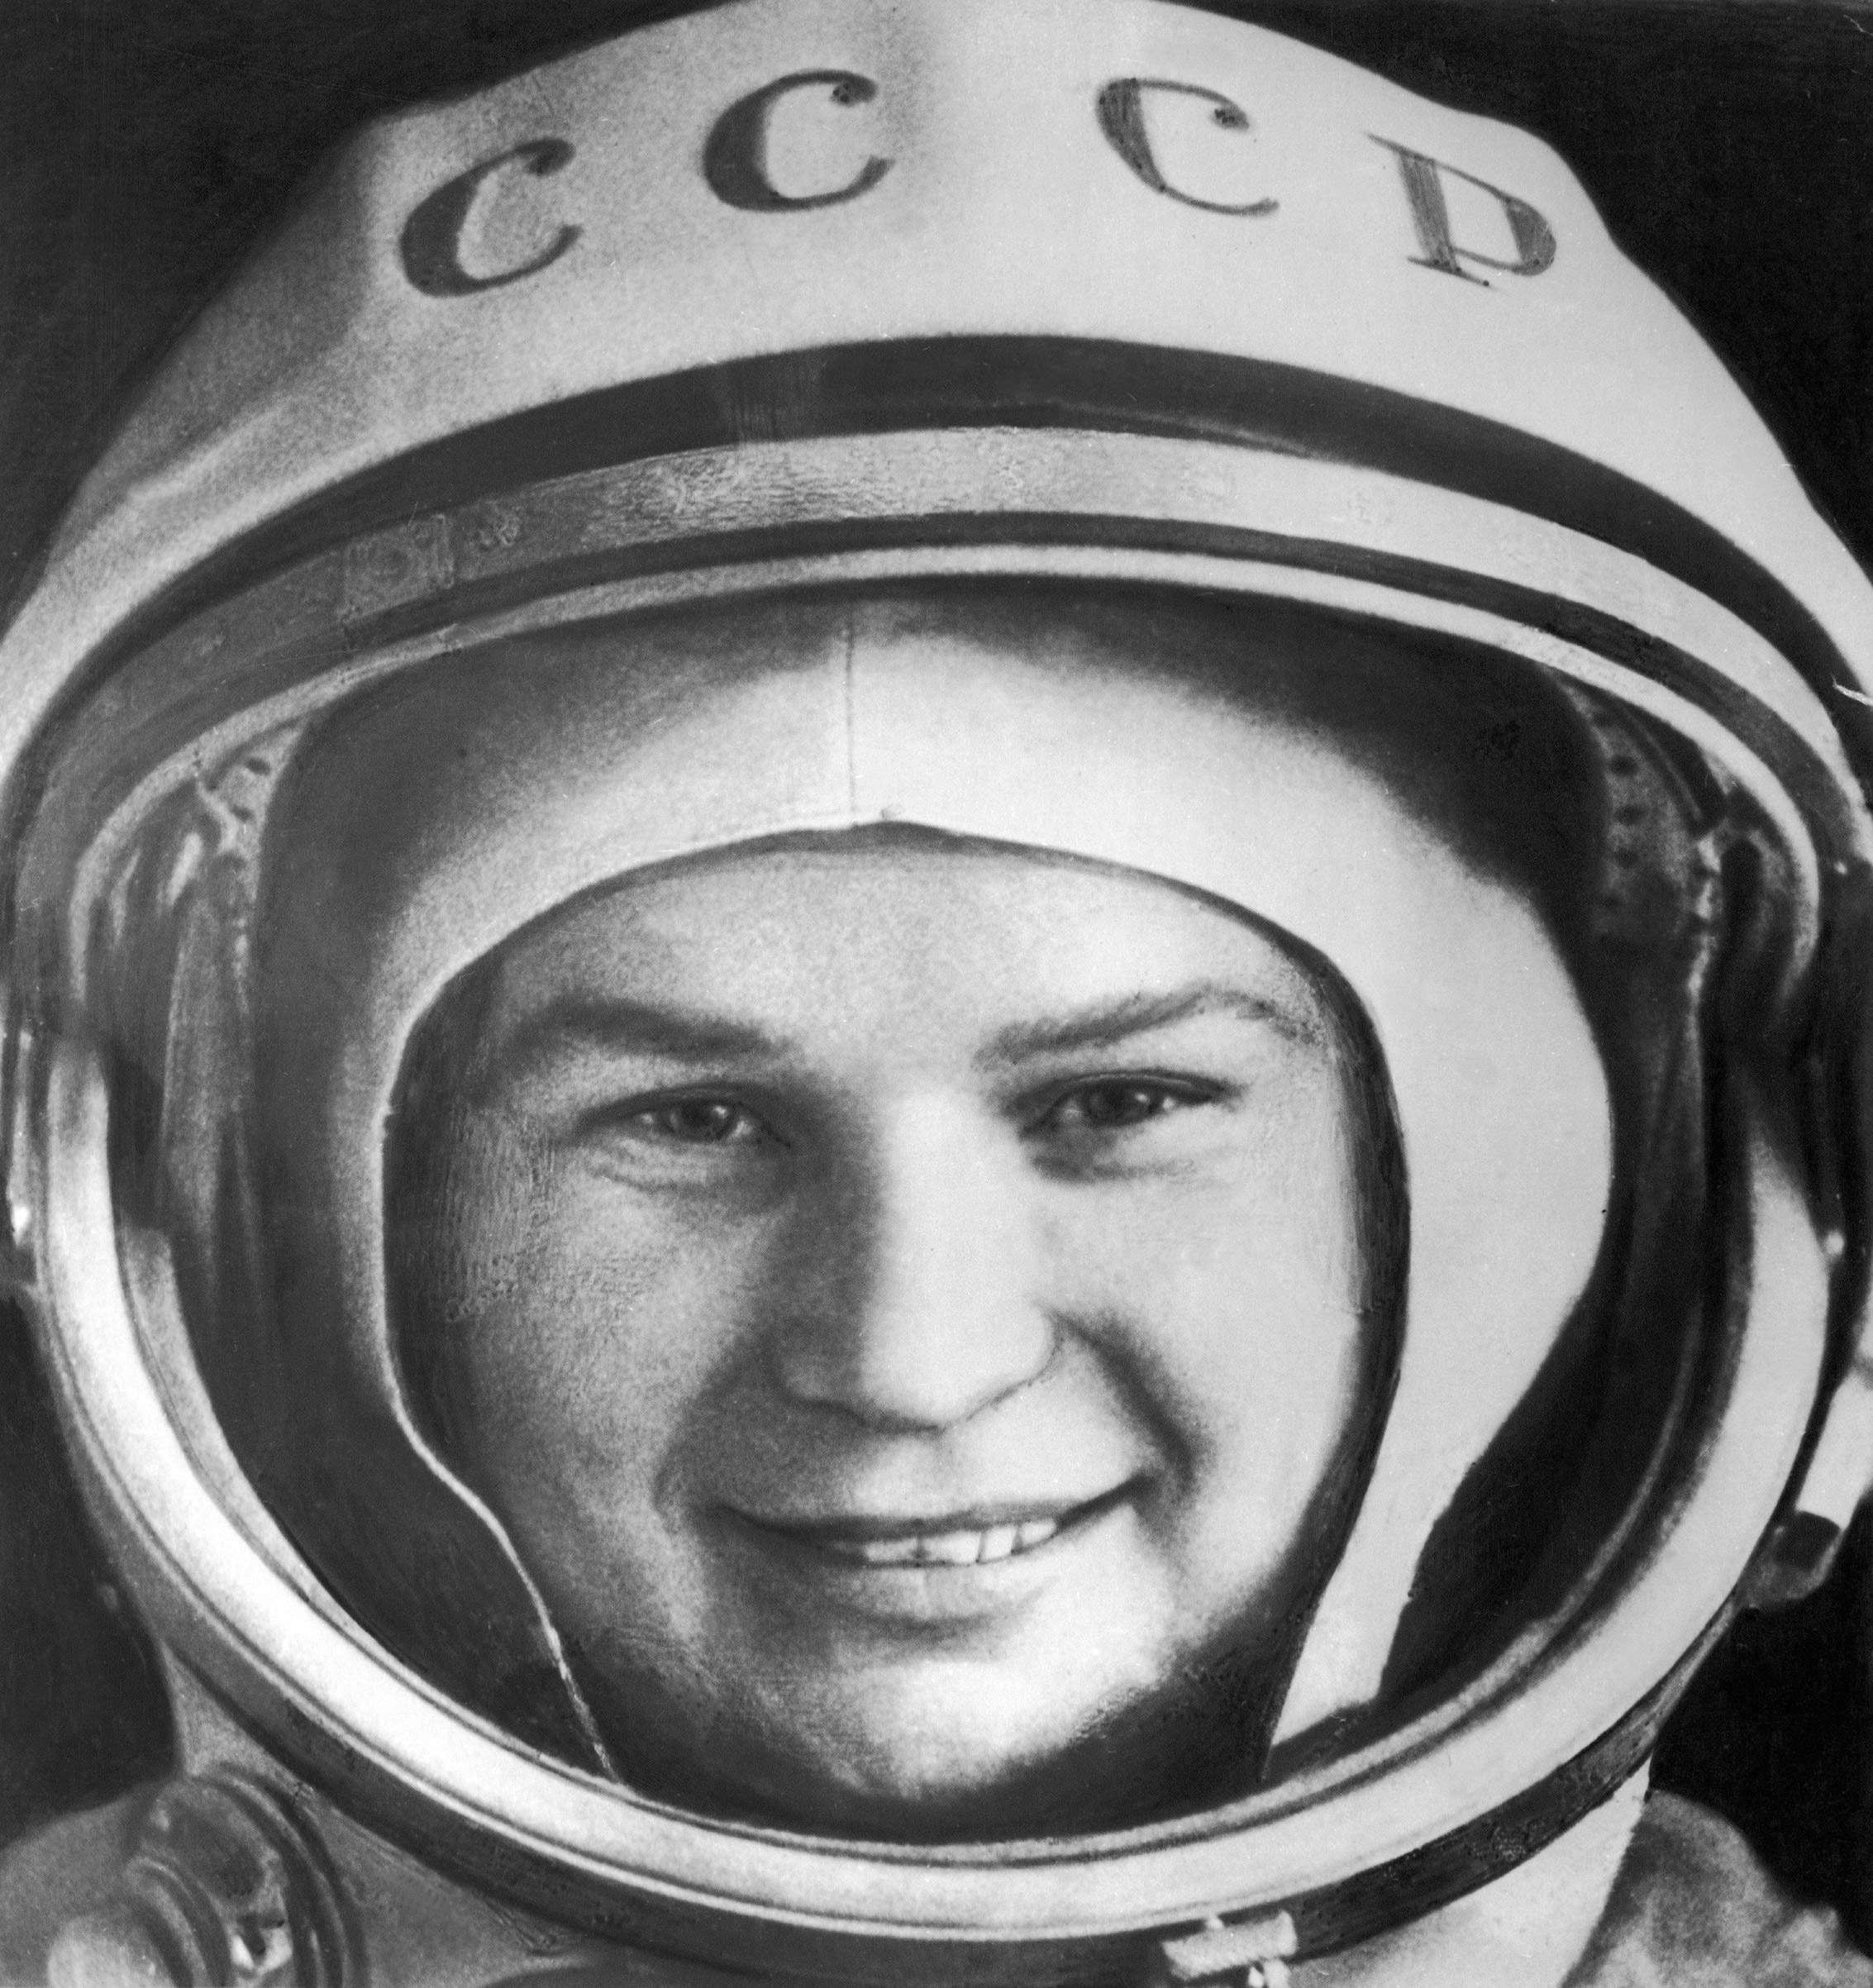 VALENTINA TERESHKOVA: First woman in space (Russian), 1963.